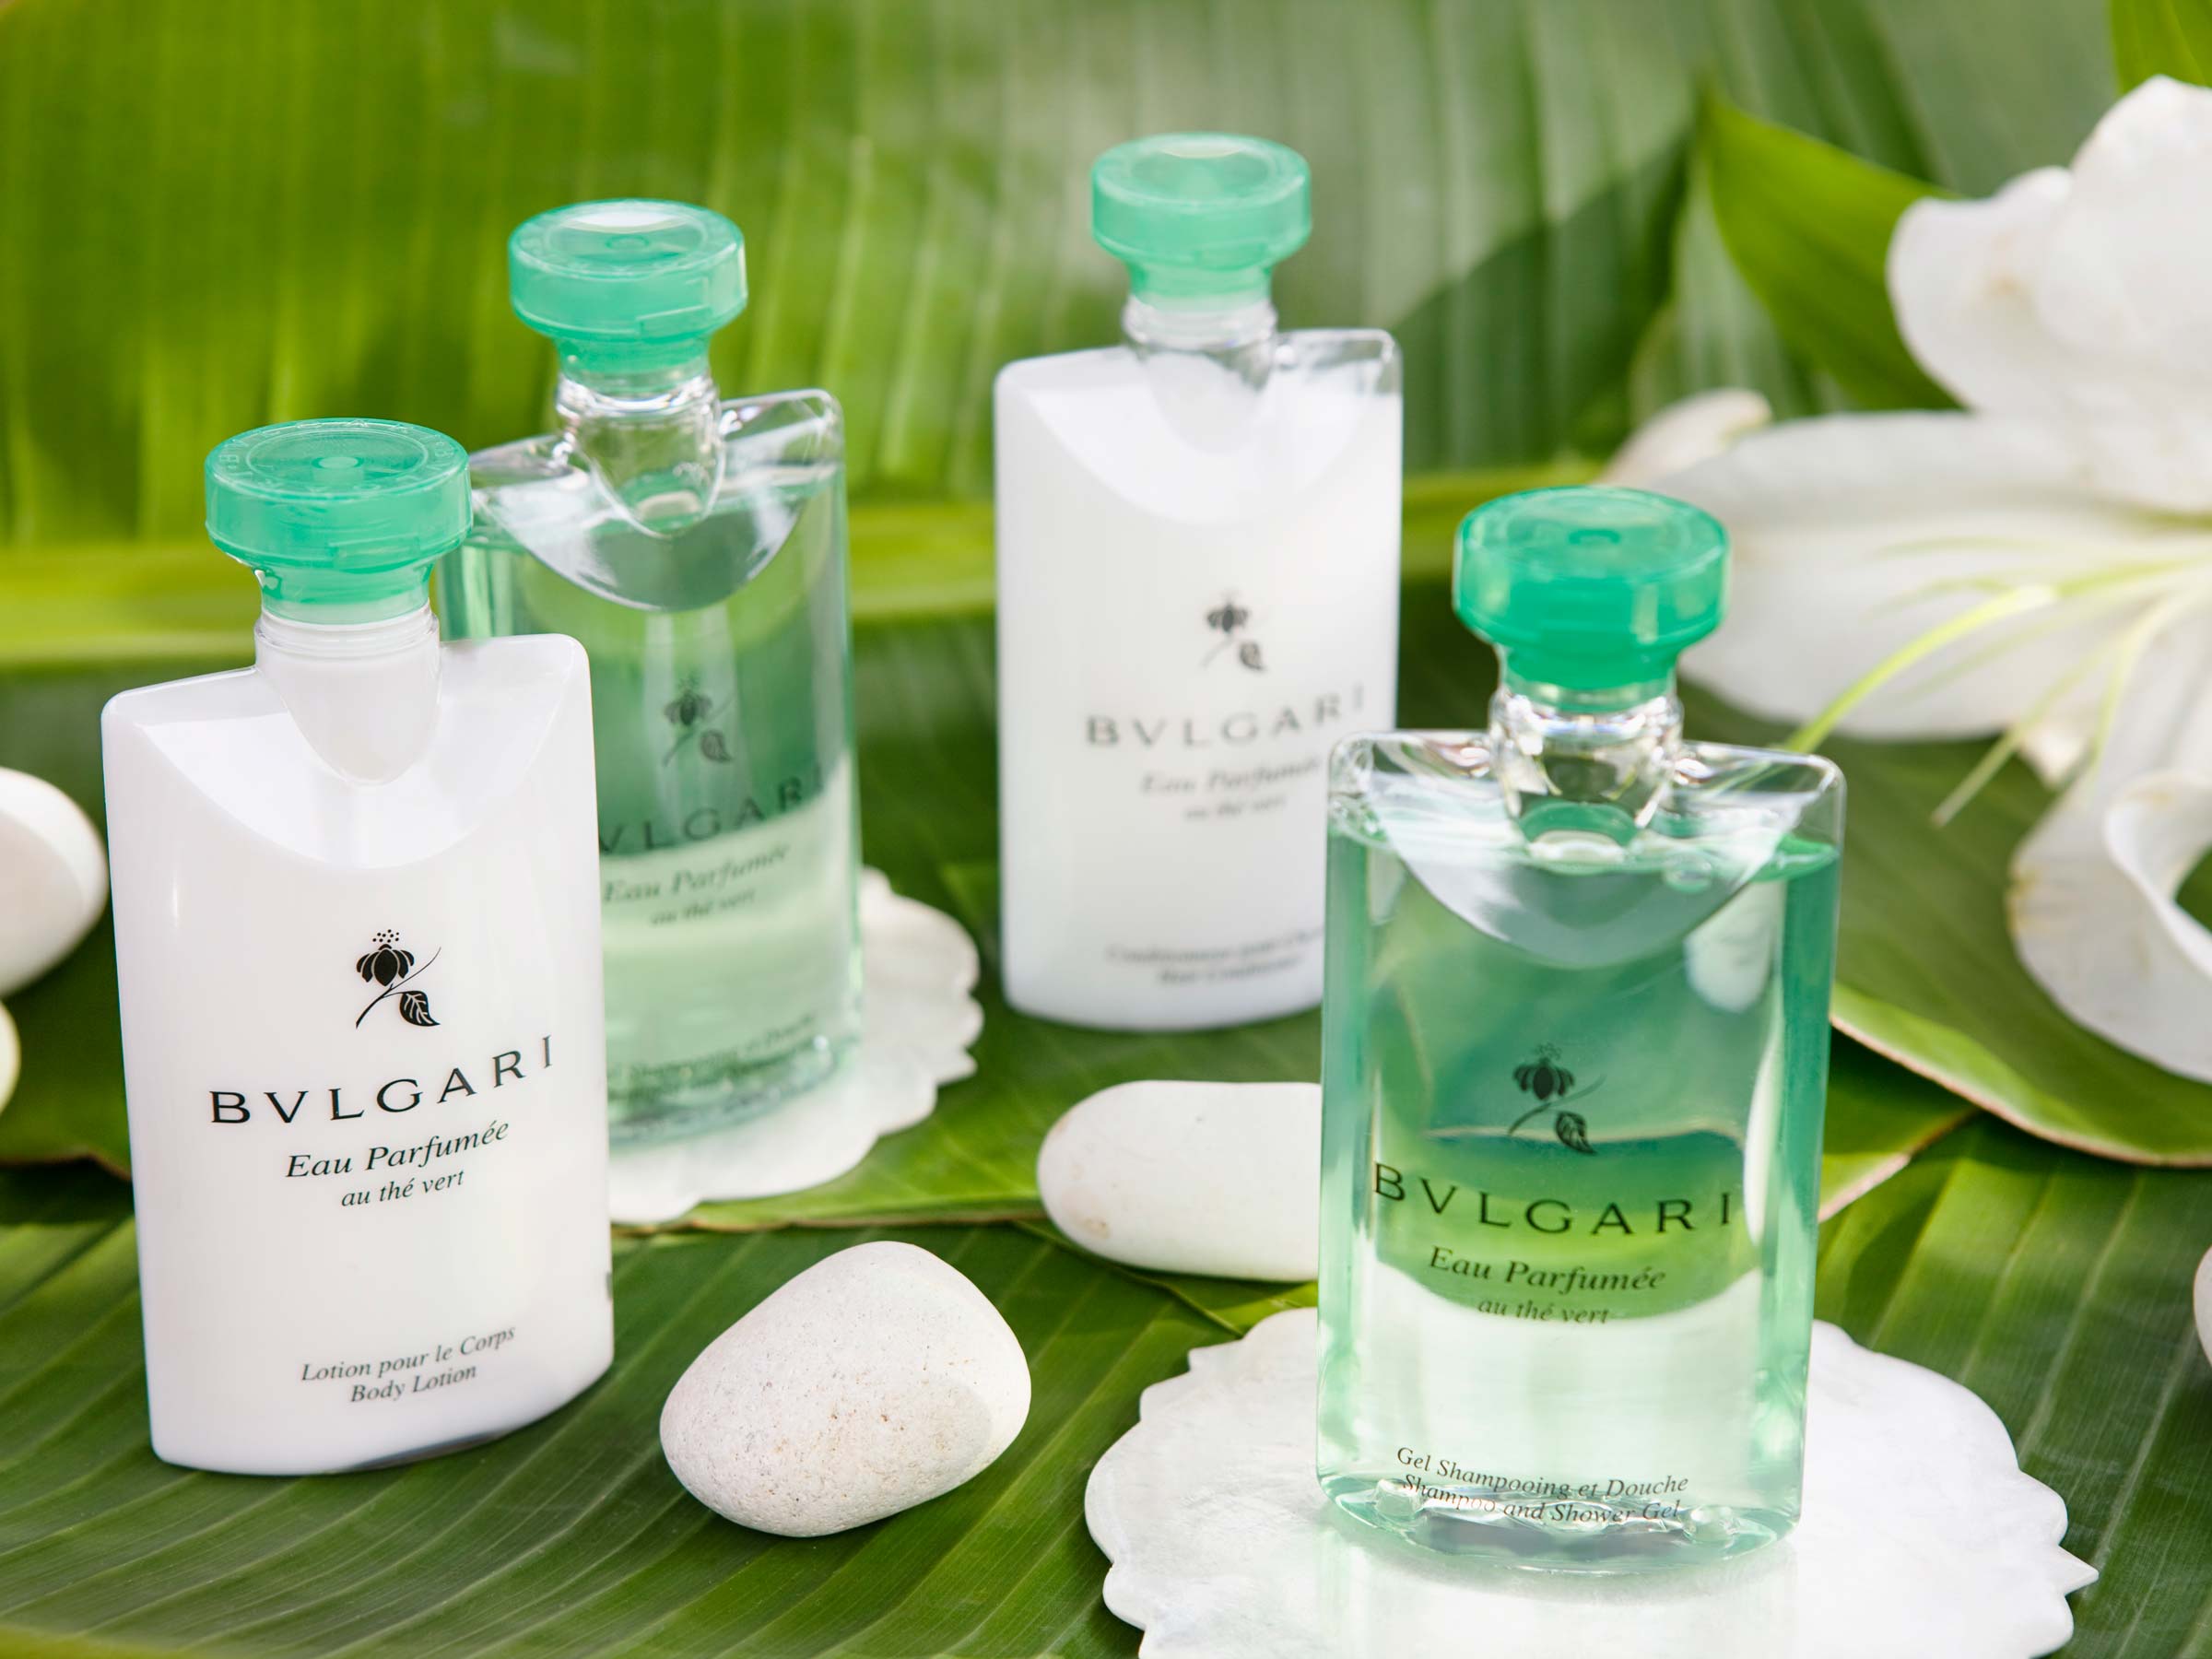 Bvlgari Bath Product Bottles